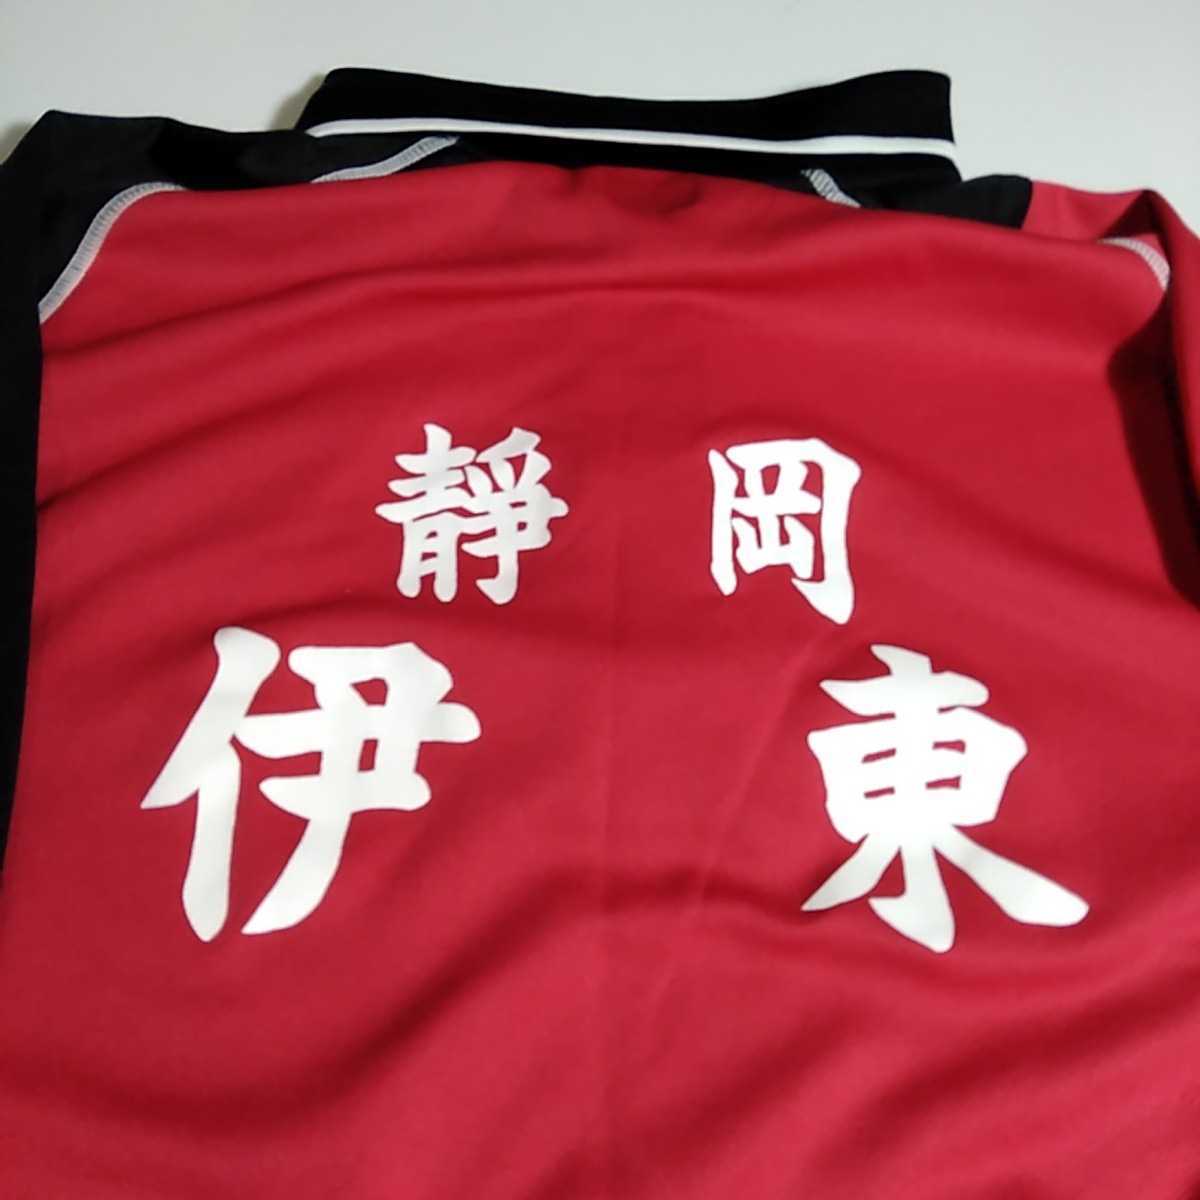  Shizuoka prefecture . higashi Yonex YONEX tennis badminton for p Ractis shirt polo-shirt pocket attaching shorts top and bottom set 